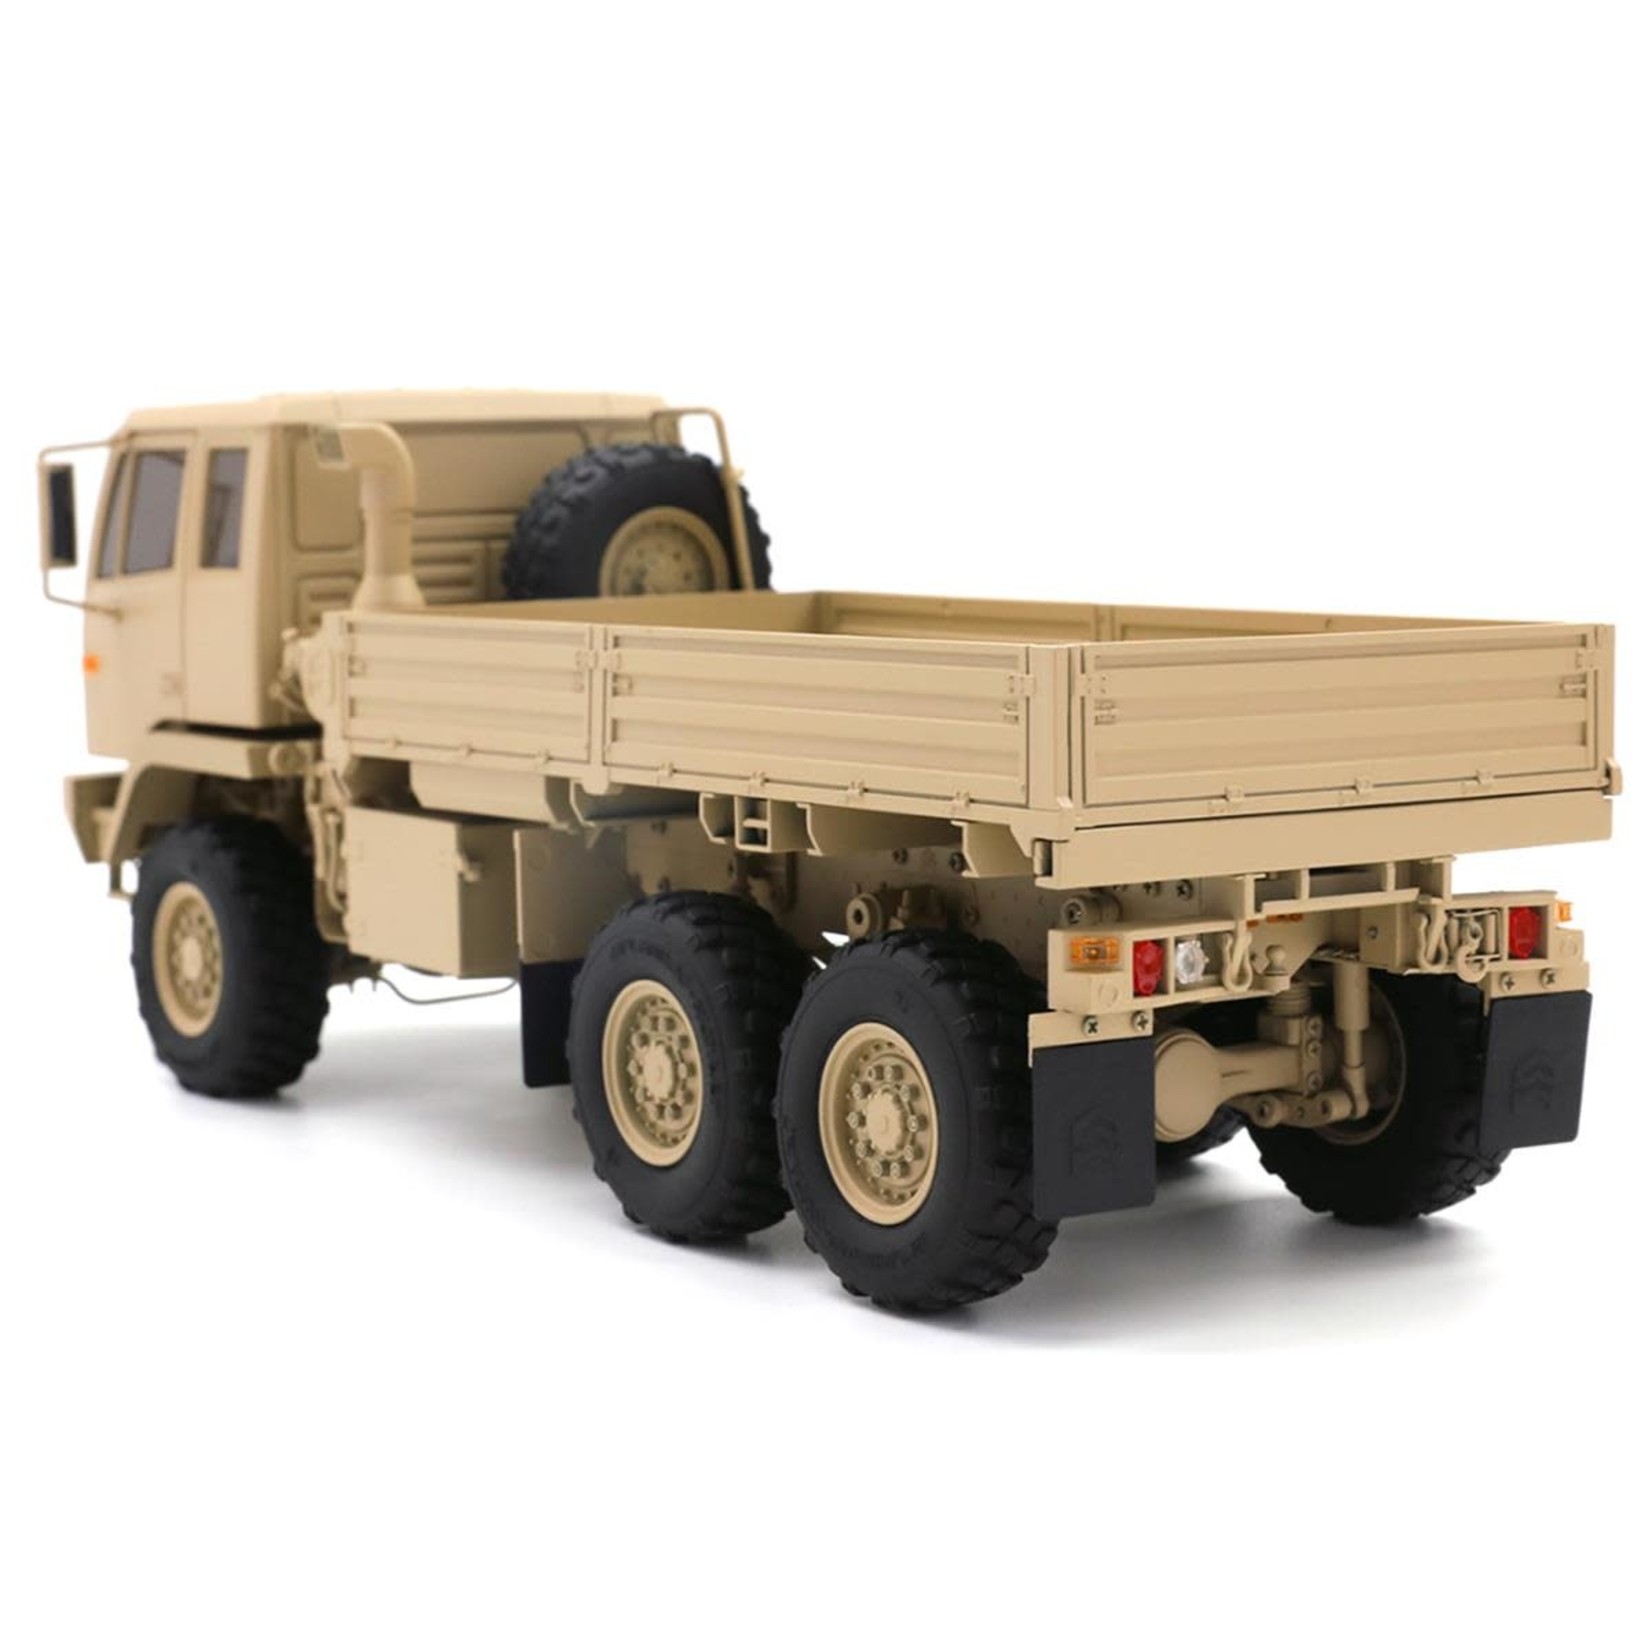 Orlandoo Hunter Orlandoo Hunter 1/32 Micro Scale Military 6x6 Truck Kit #OH32M02